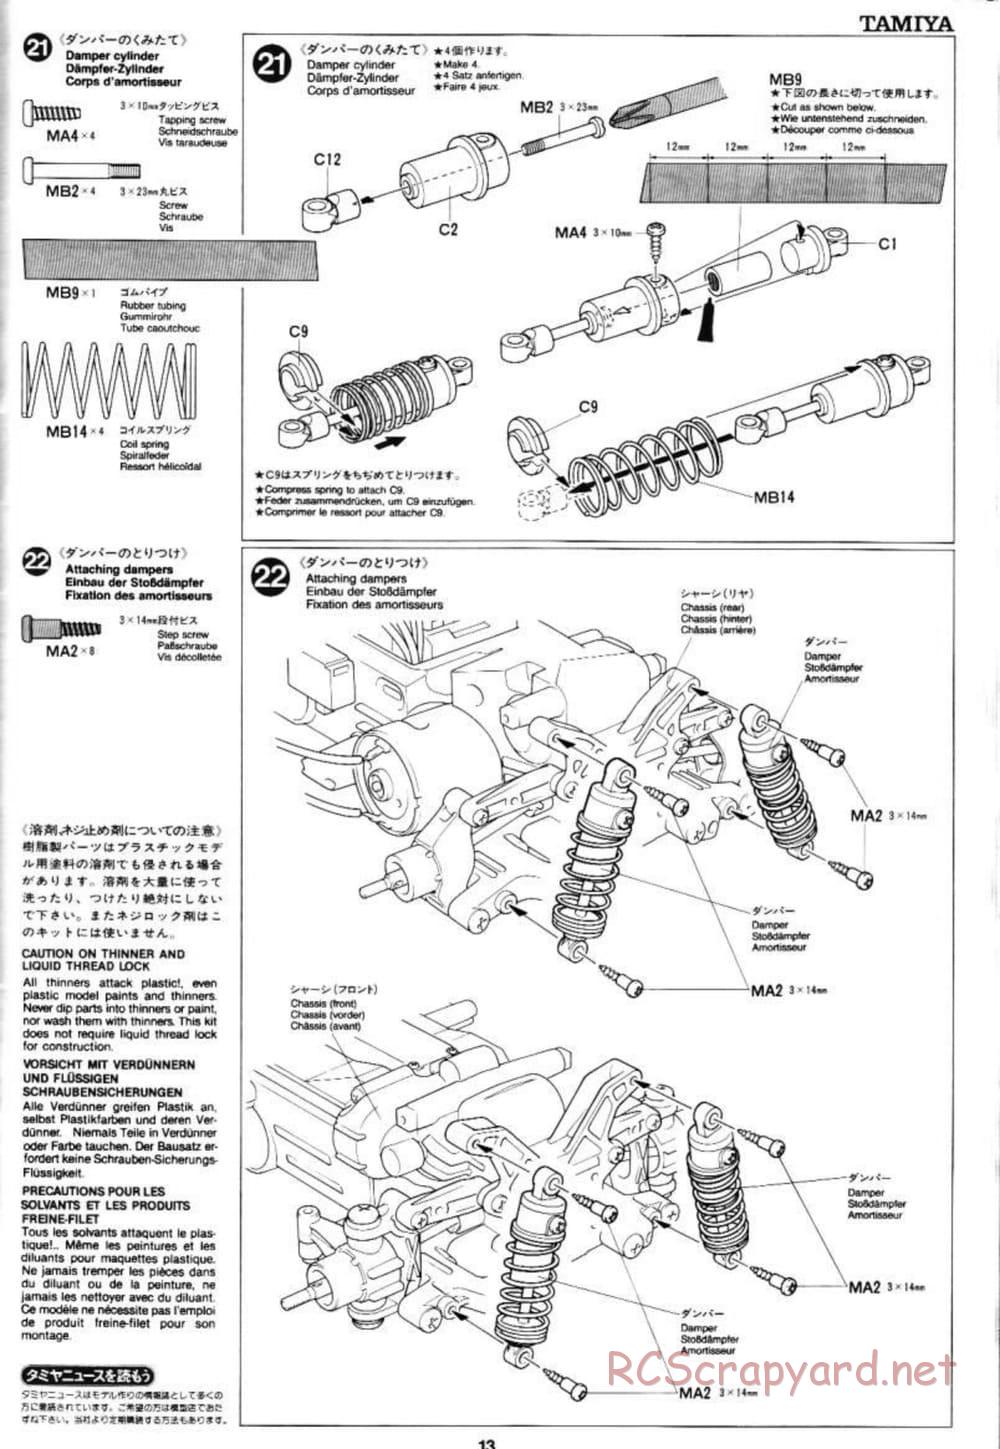 Tamiya - Peugeot 406 ST - TL-01 Chassis - Manual - Page 13